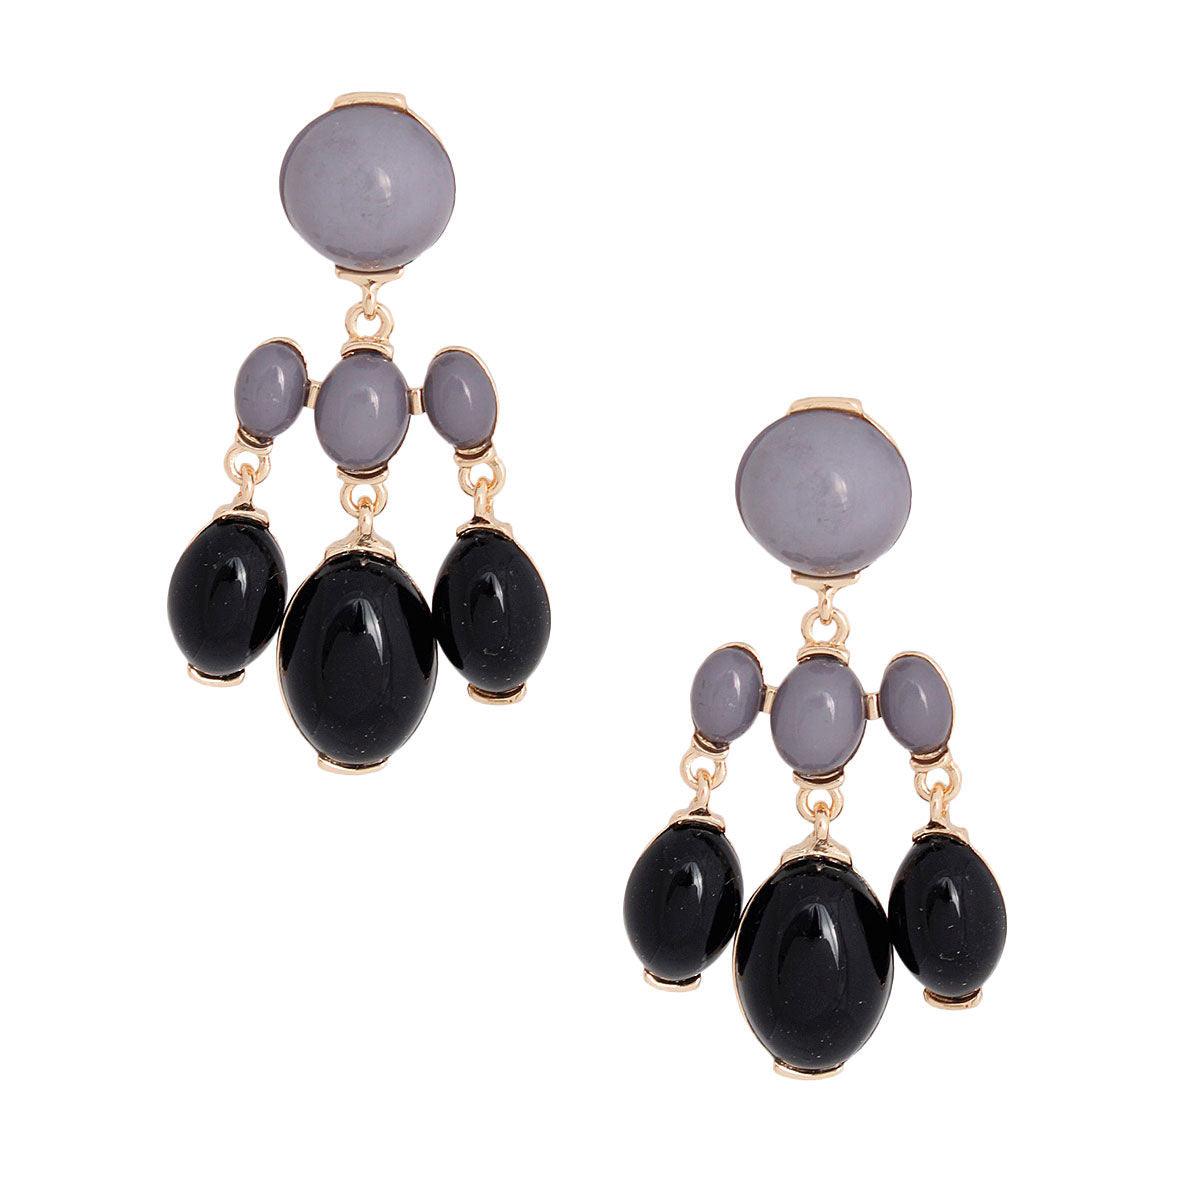 Stunning Gray & Black Cascade Earrings - Bead Drops You'll Love